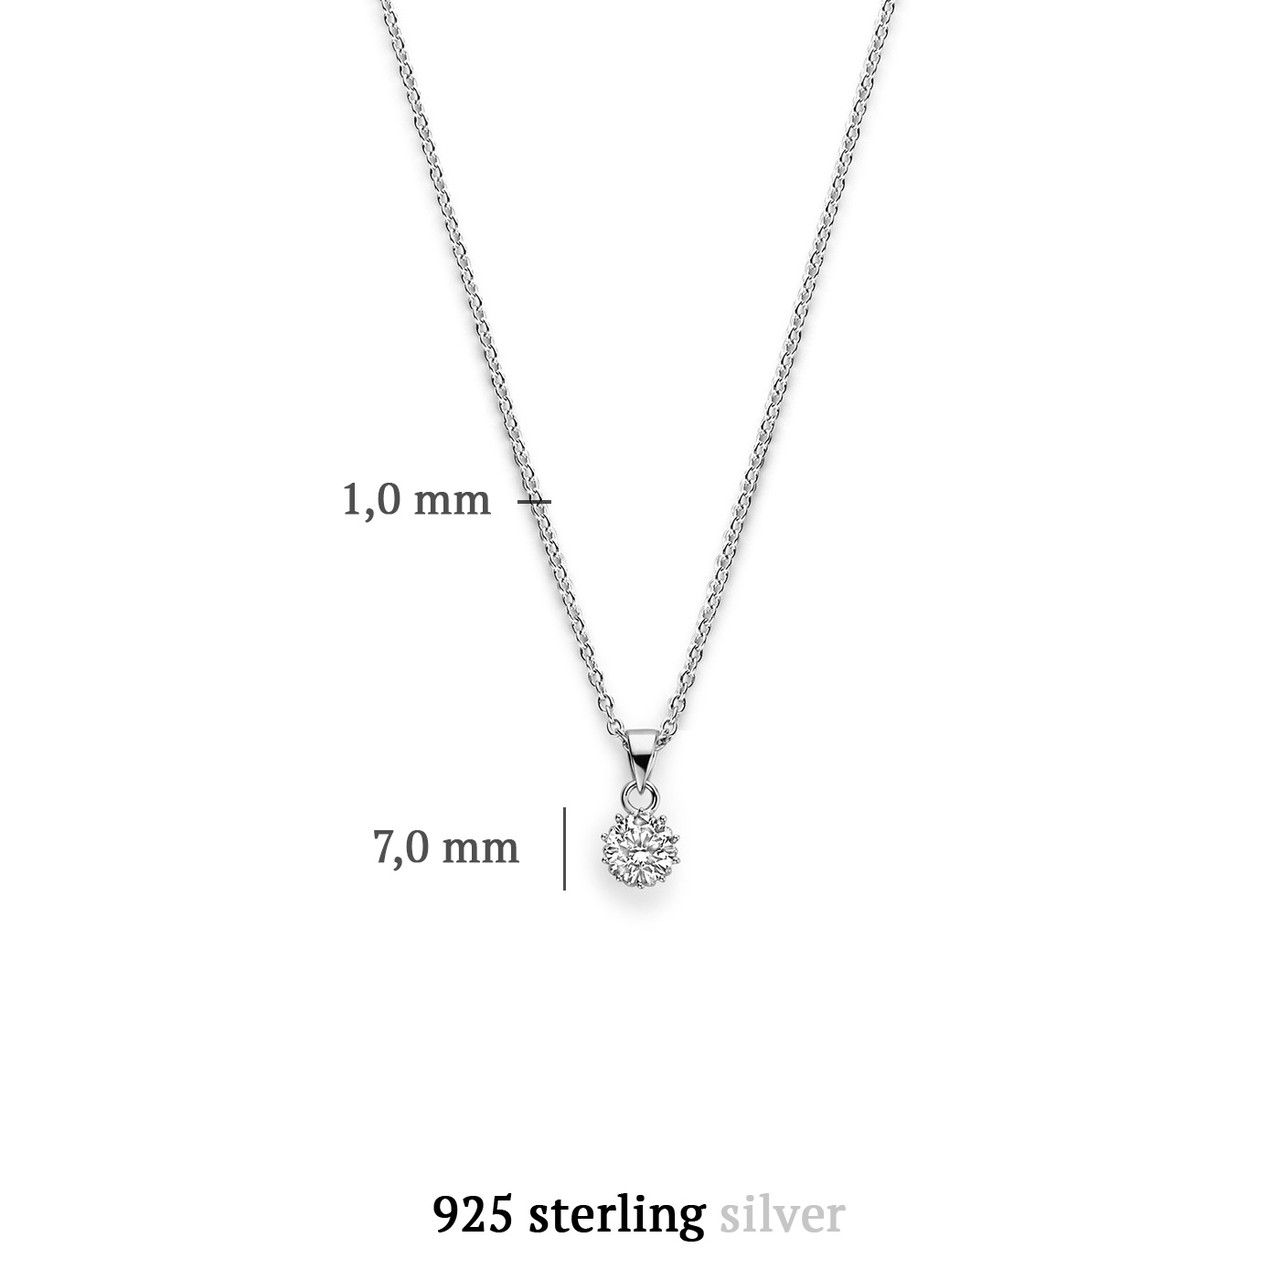 Parte Di Me - 925 sterling silver necklace PDM34013